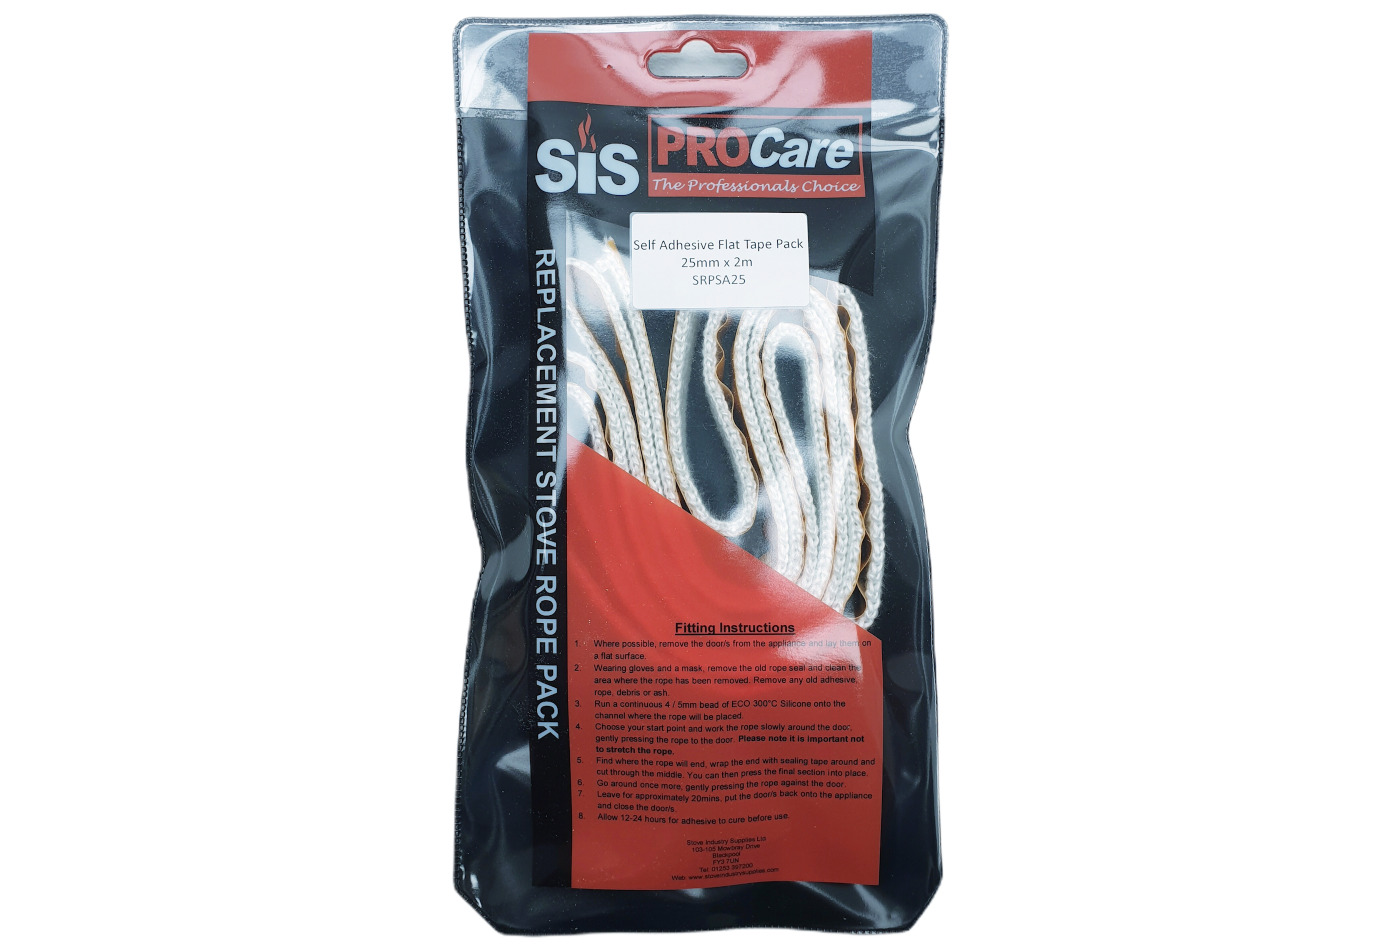 SiS Procare White 25 metrem x 2 metre Self Adhesive Flat Tape Pack - product code SRPSA25